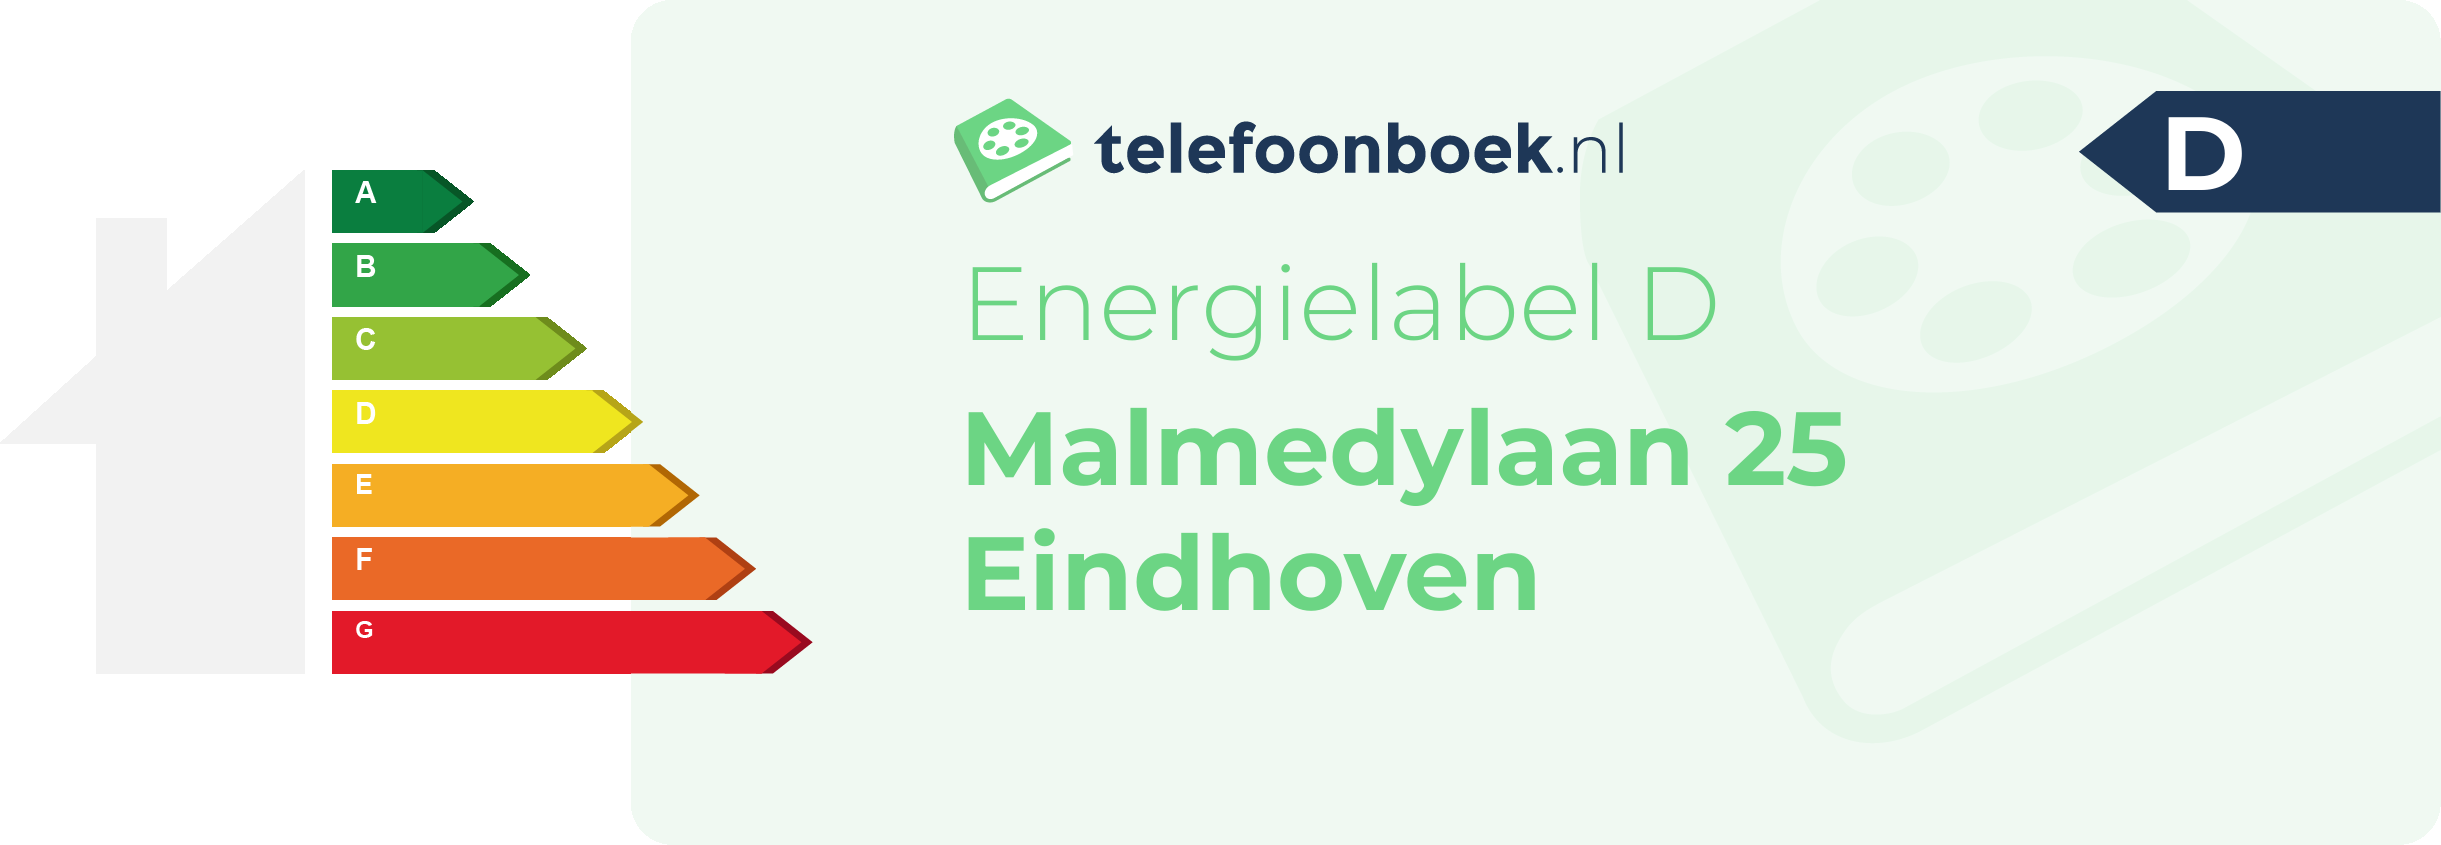 Energielabel Malmedylaan 25 Eindhoven